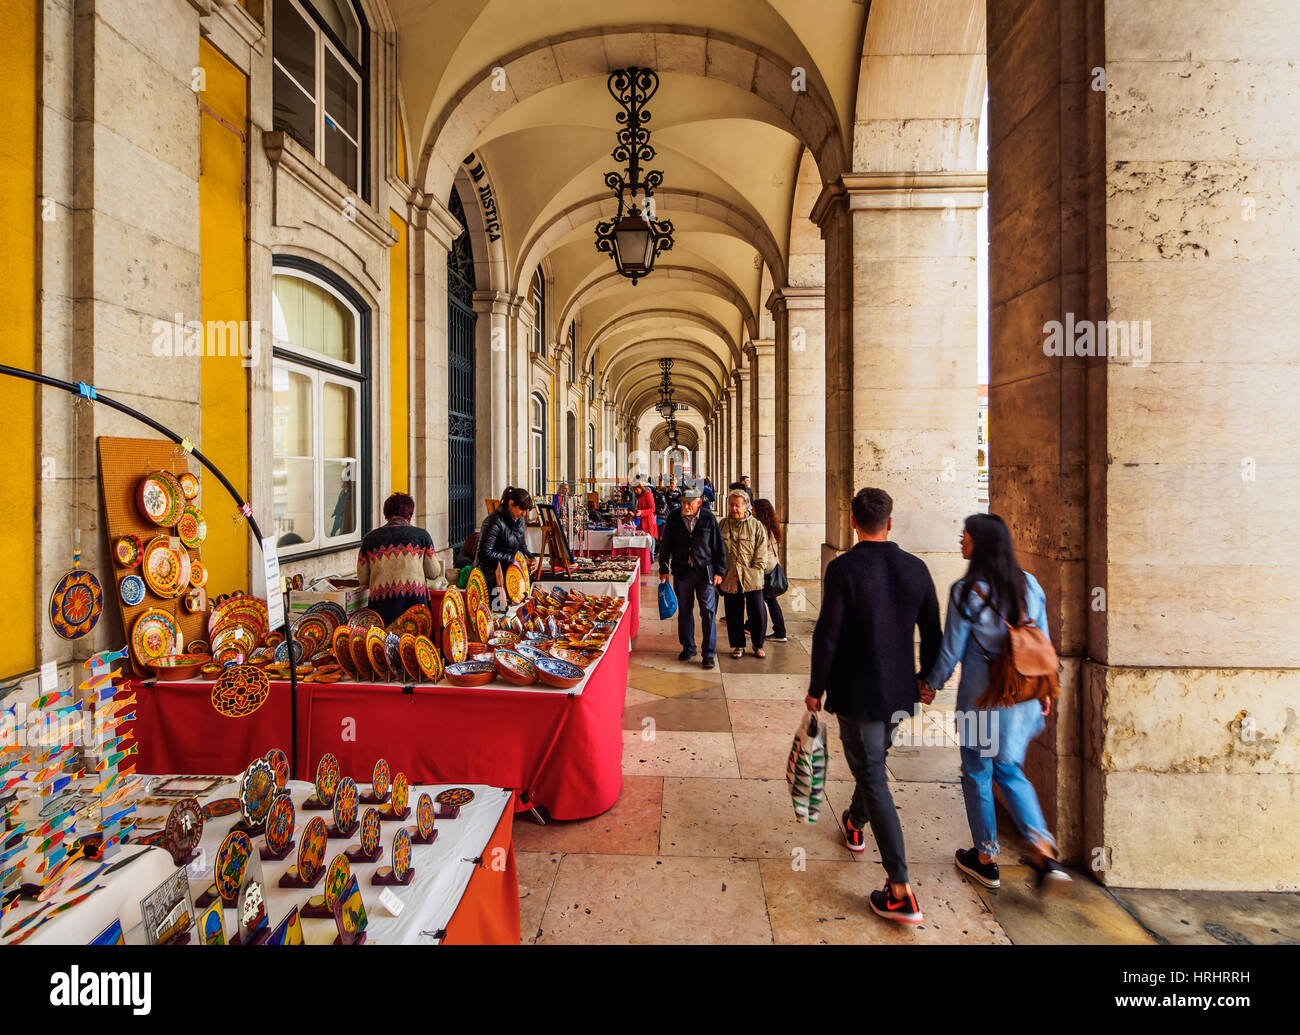 Market under Arcades of the Praca do Comercio, Lisbon, Portugal Stock Photo